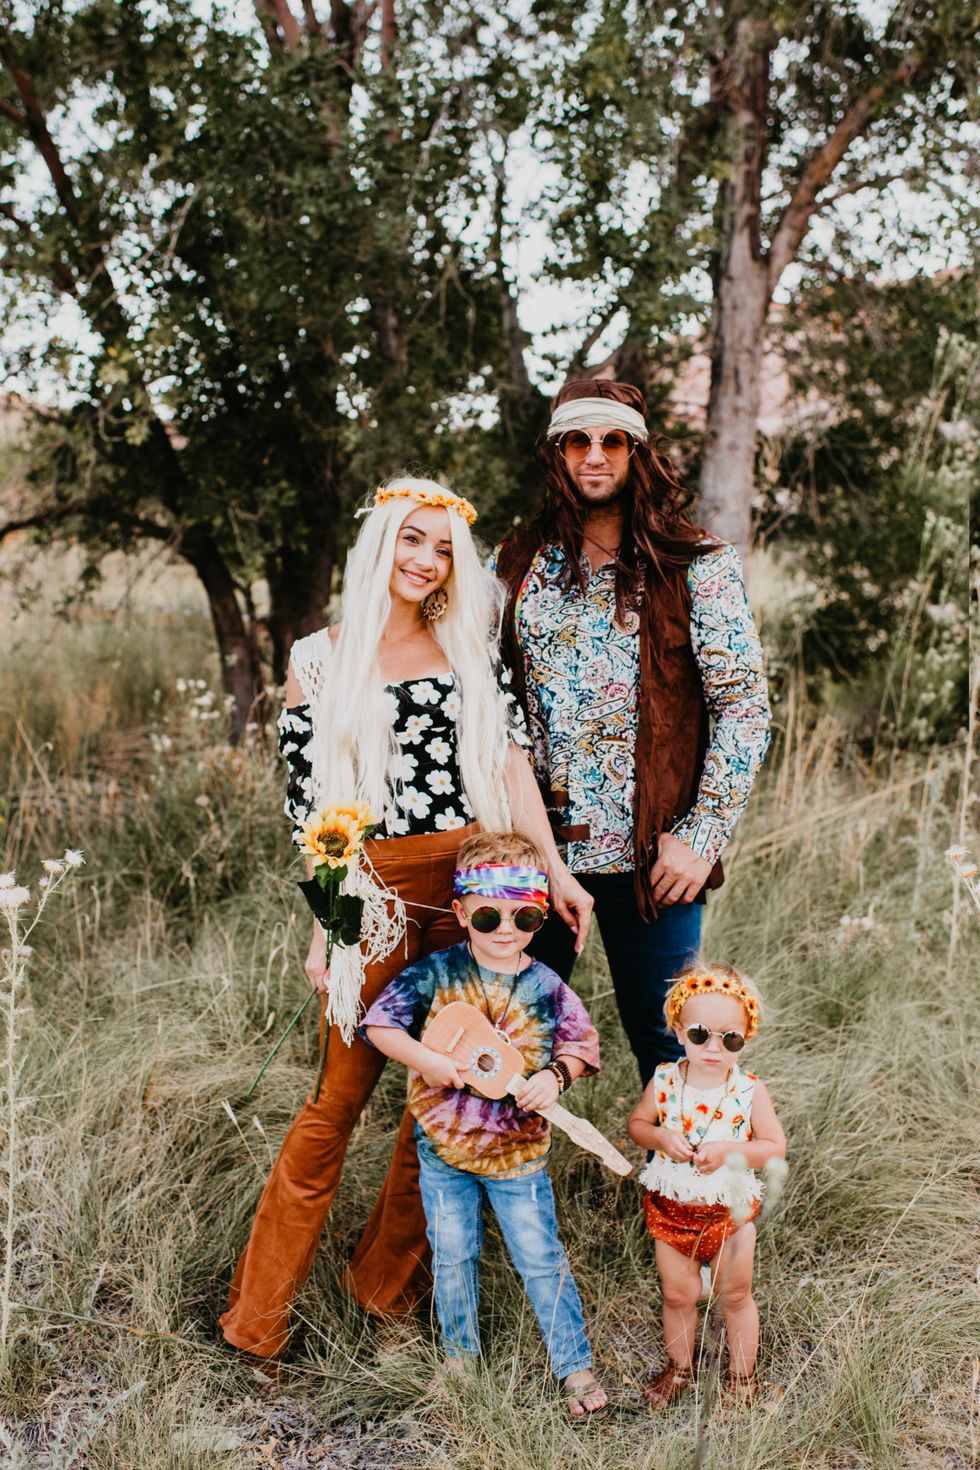 18 DIY Hippie Costume Ideas - Hippie Halloween Costumes You Can DIY